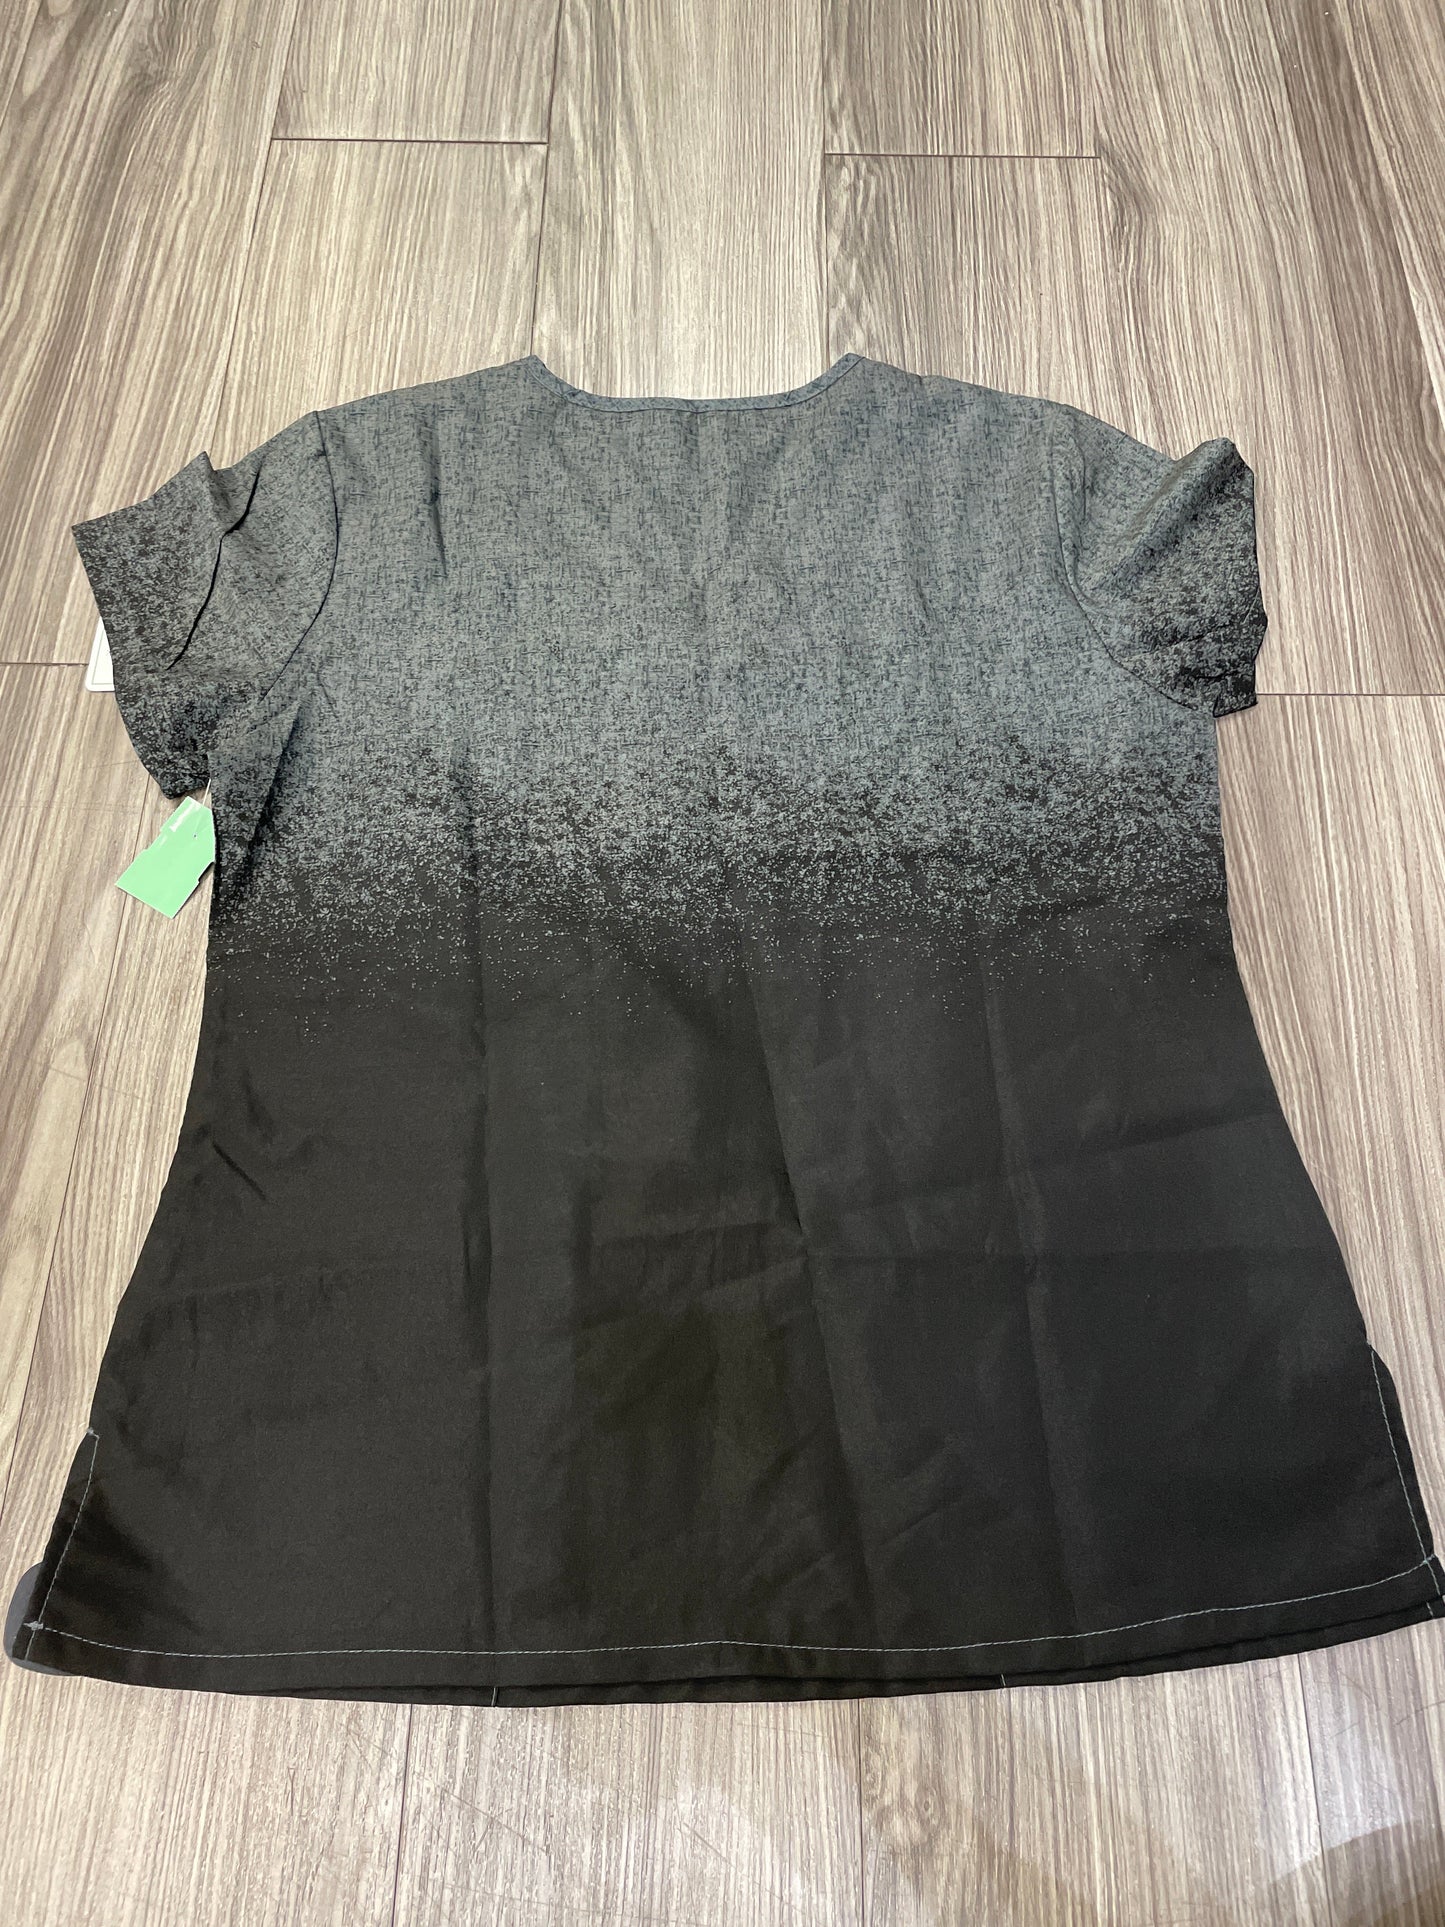 Black & Grey Top Short Sleeve Clothes Mentor, Size L